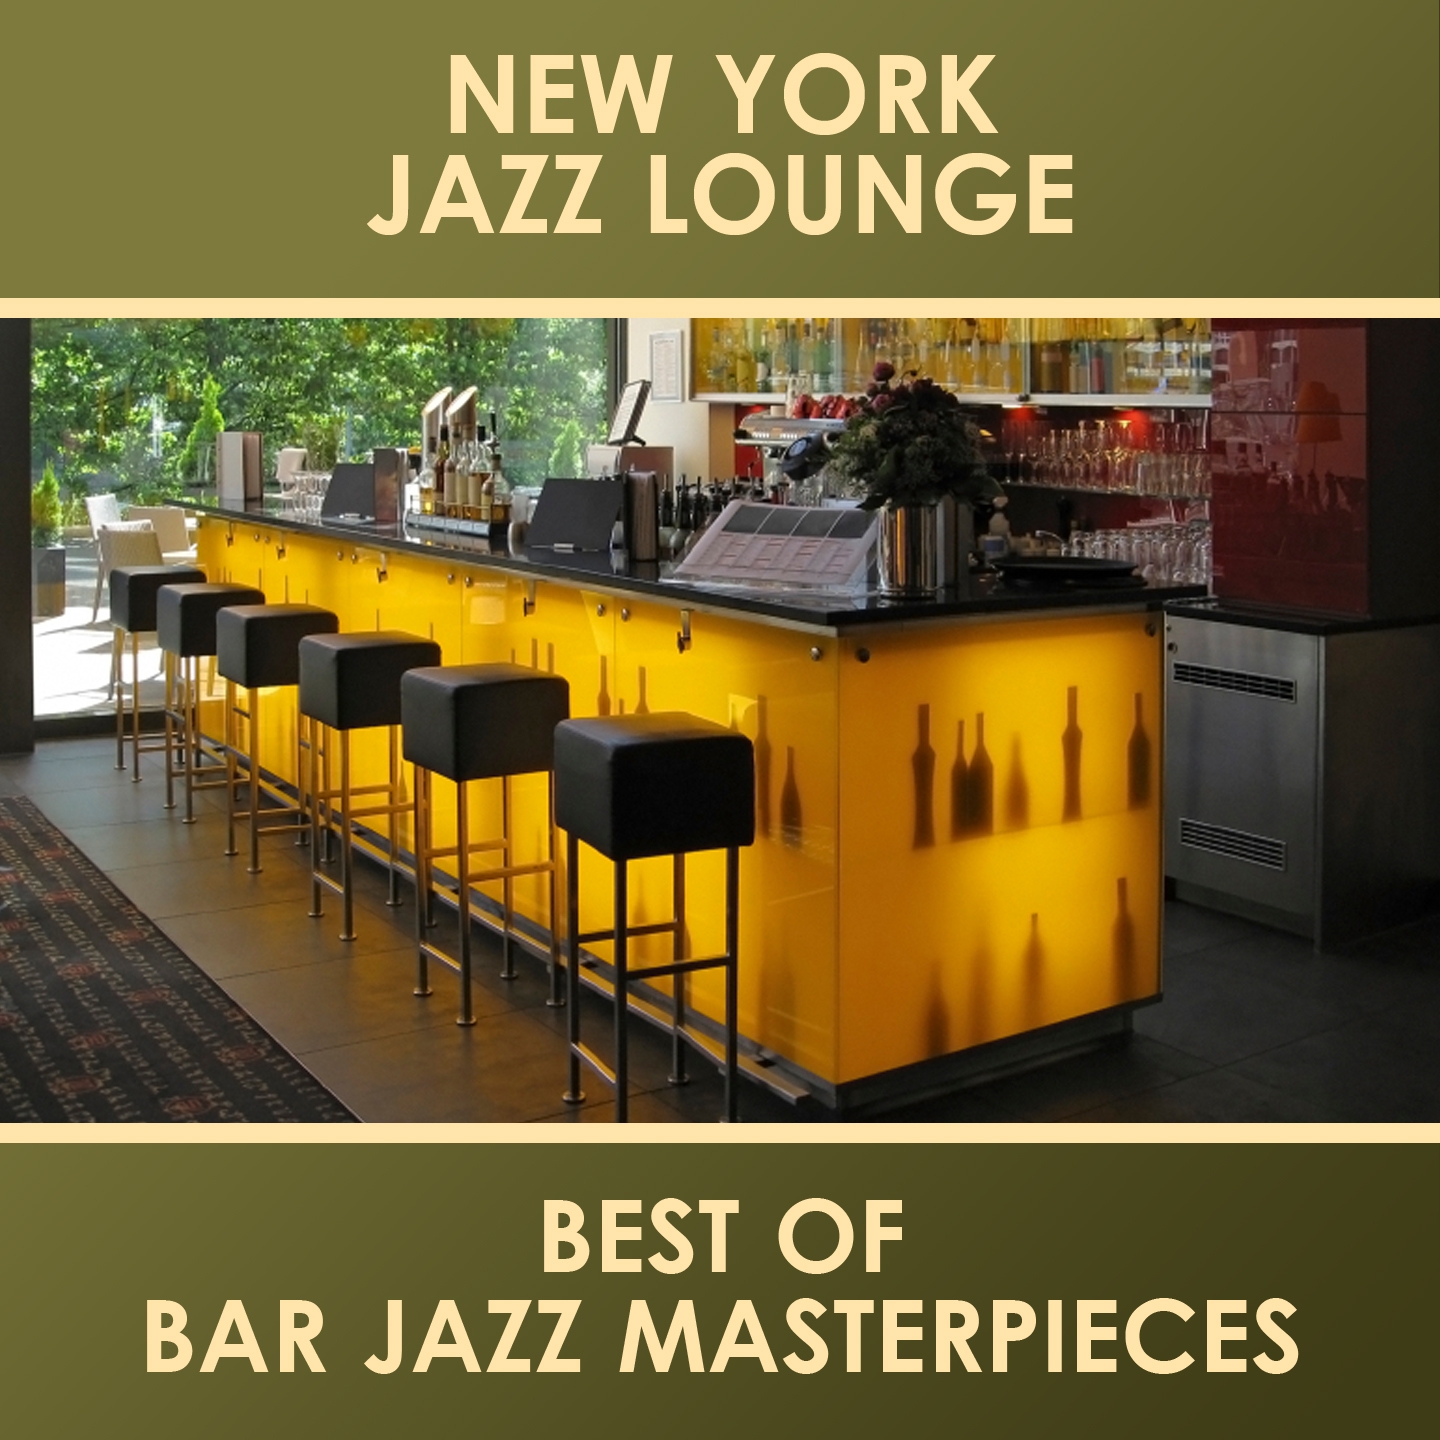 Best of Bar Jazz Masterpieces